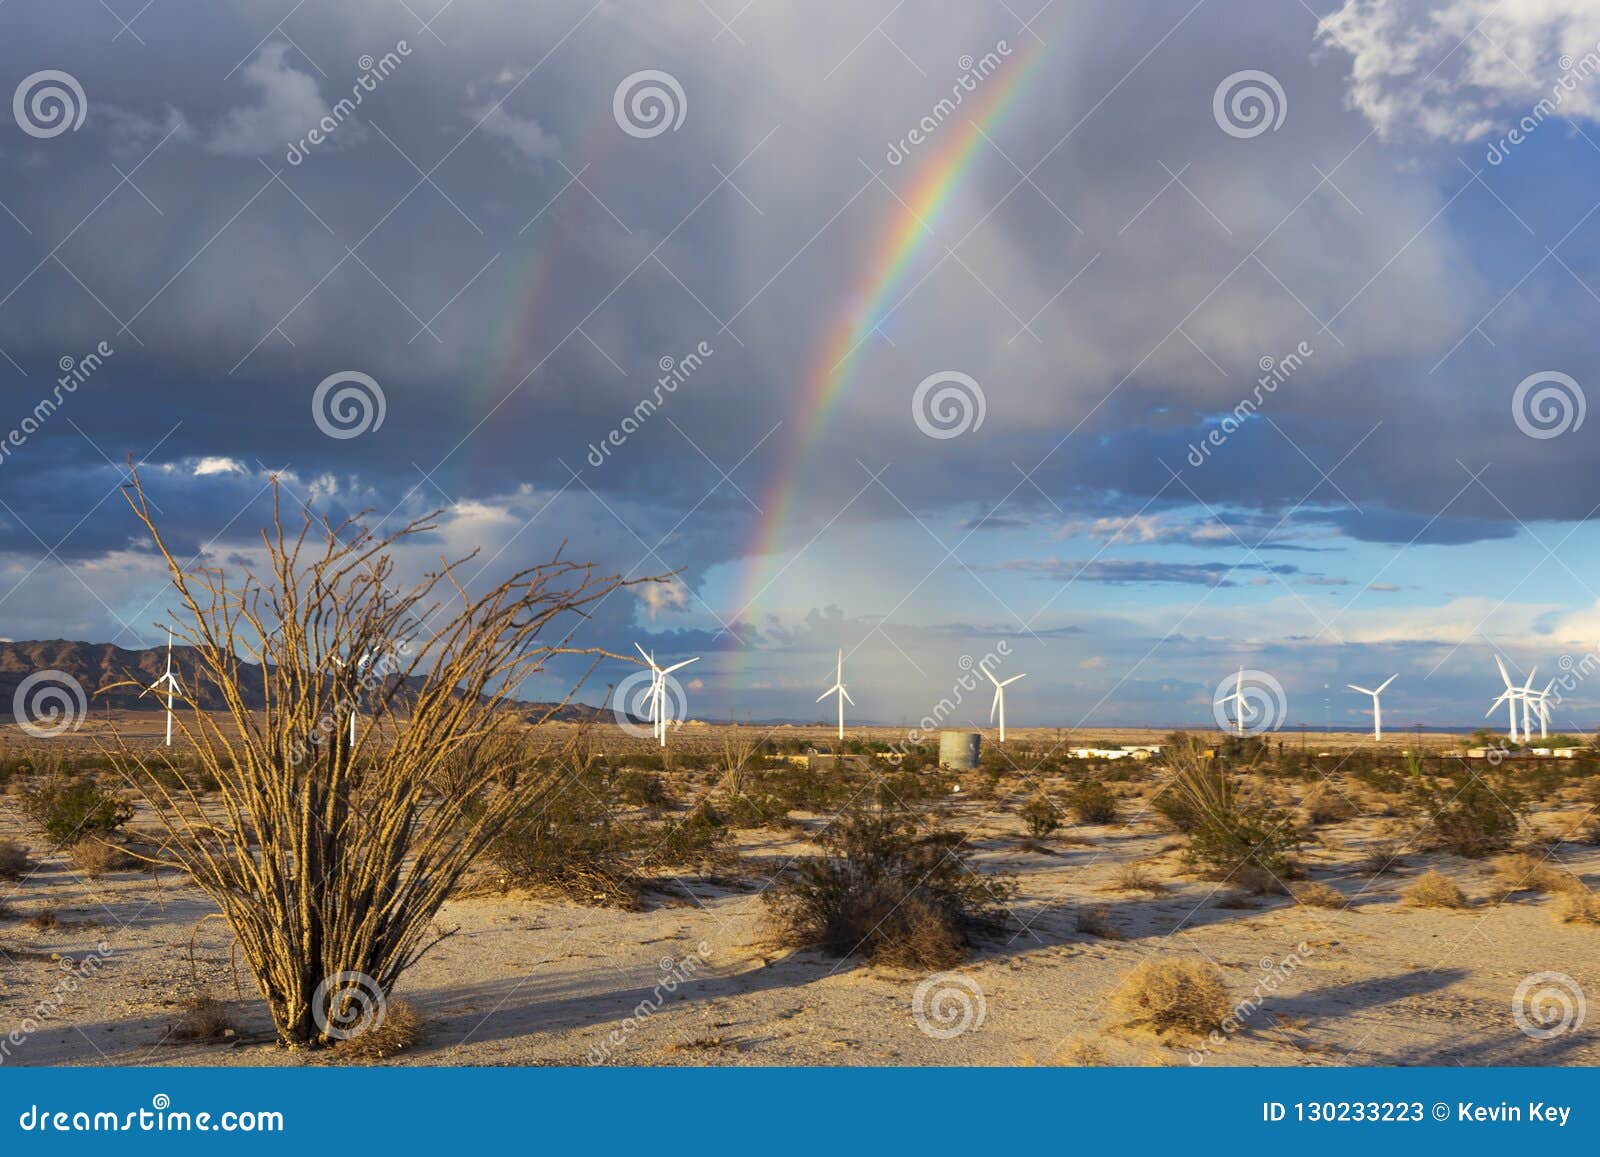 rainbow, ocotillo, and wind turbines in the desert